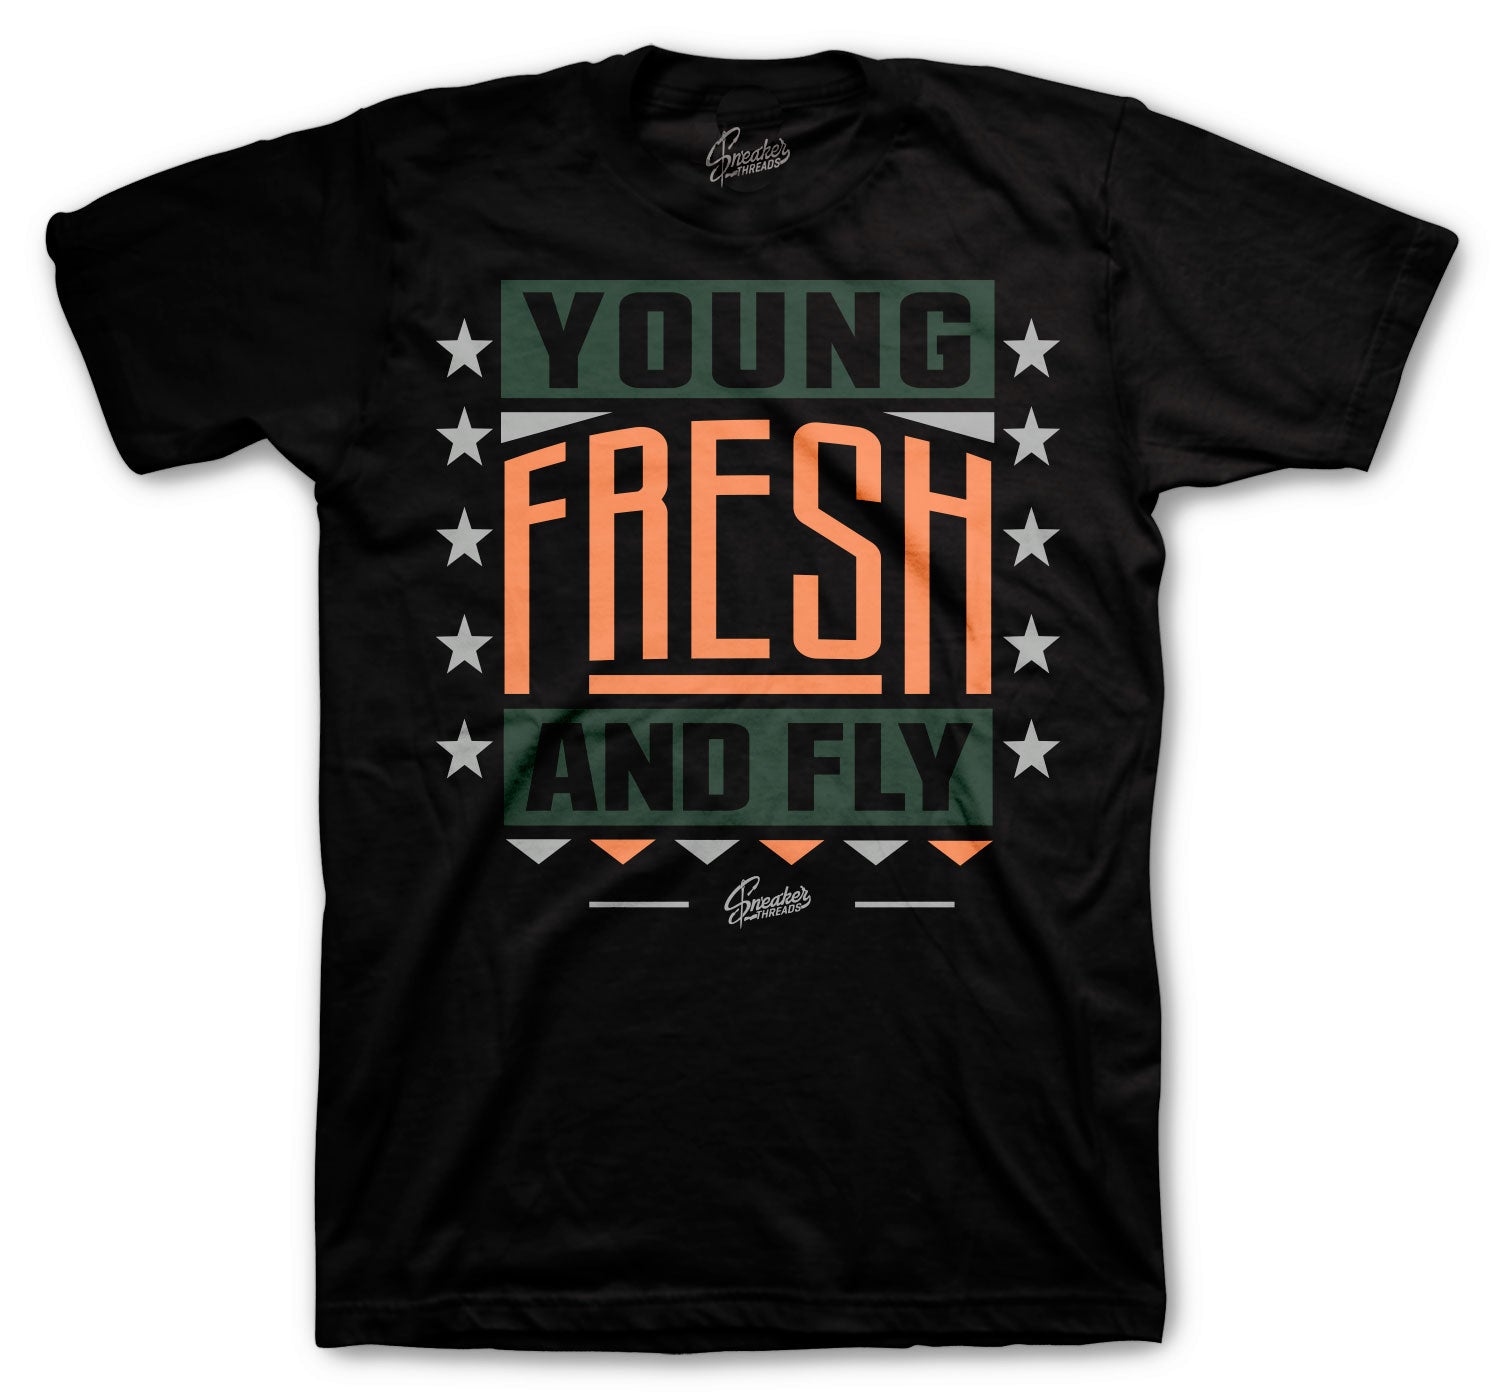 700 Wash Orange Shirt - Young Fresh - Black